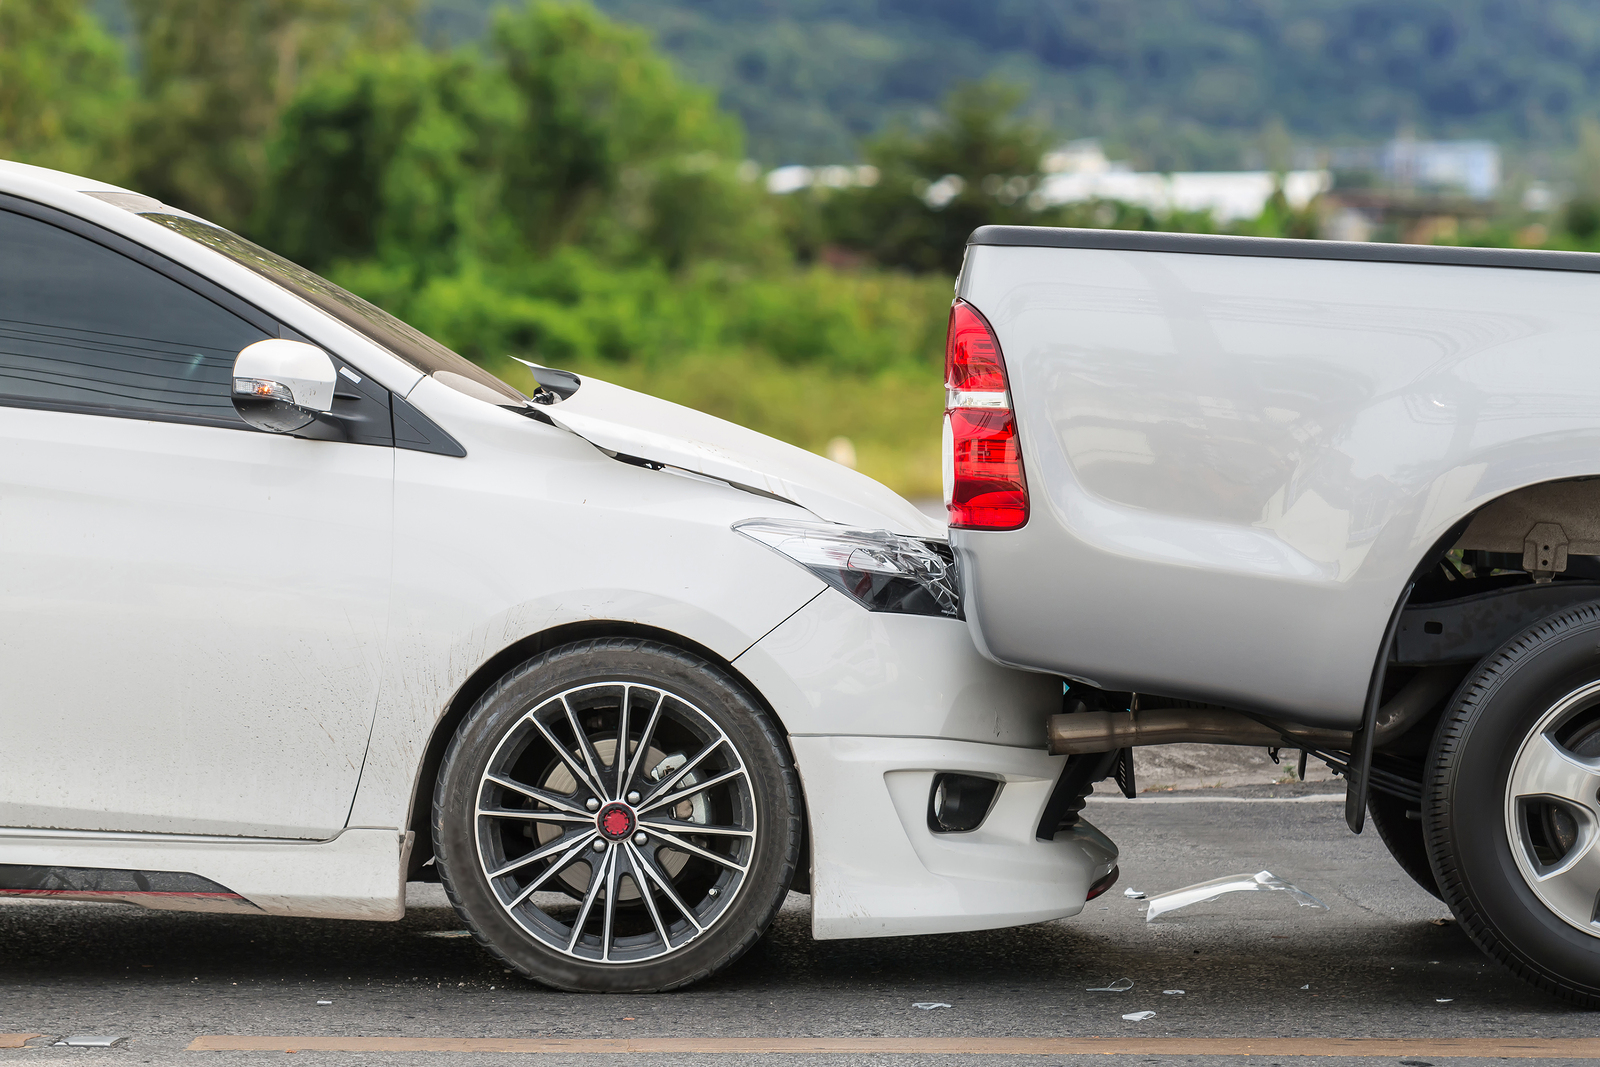 Austin Automobile Accident Attorney